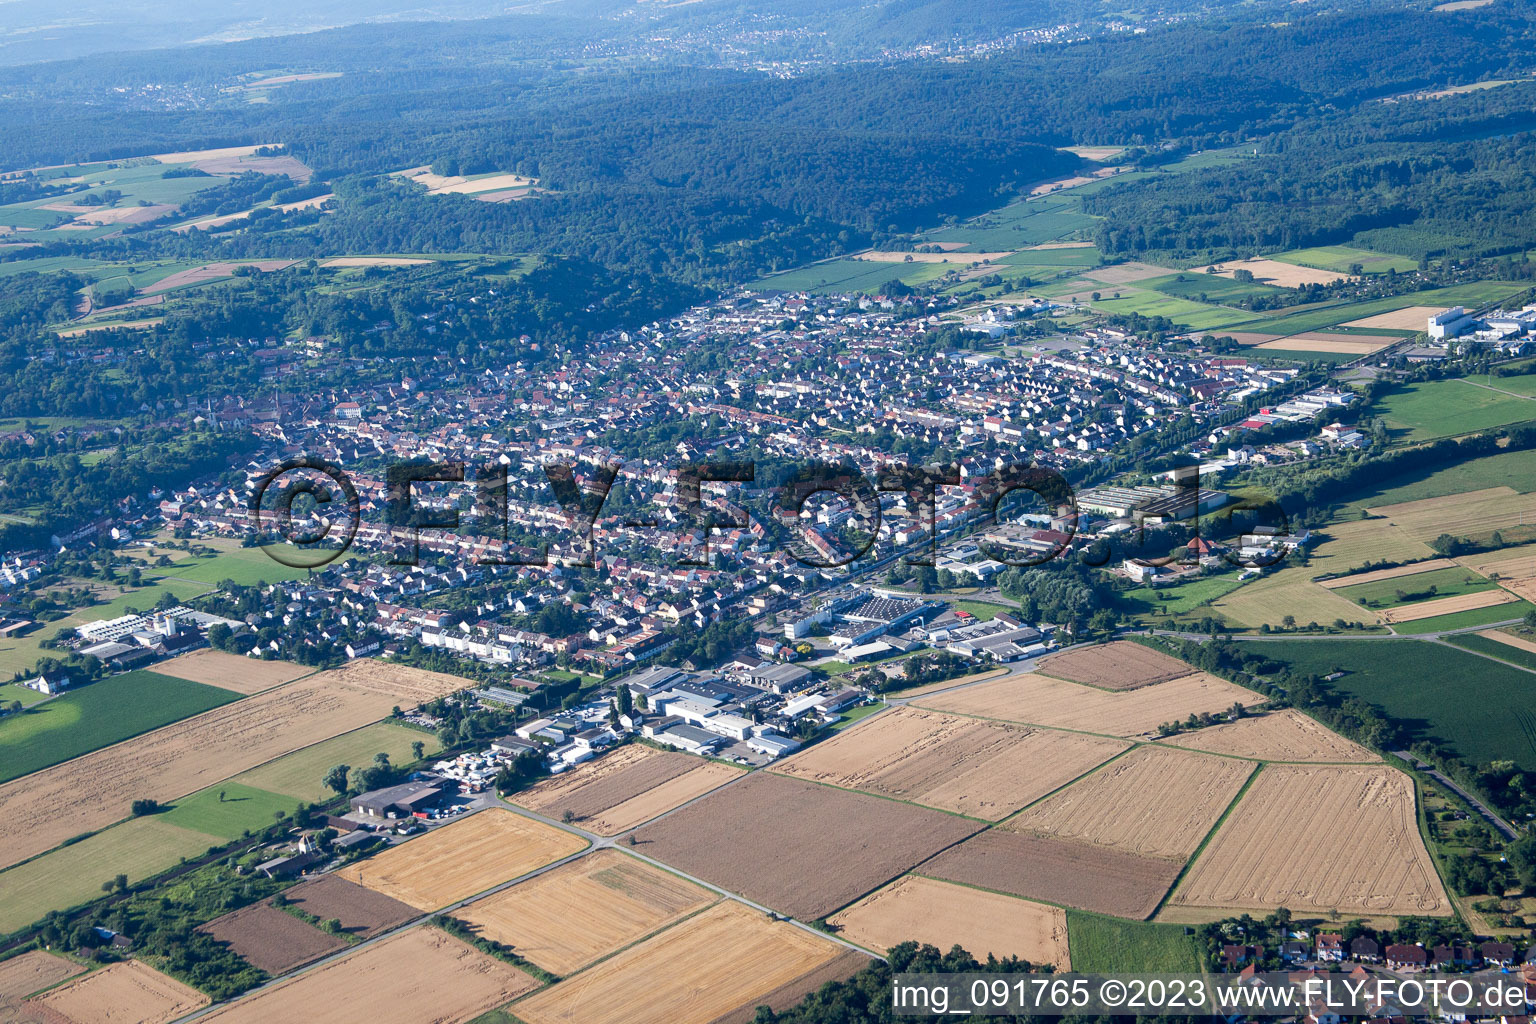 Weingarten dans le département Bade-Wurtemberg, Allemagne depuis l'avion